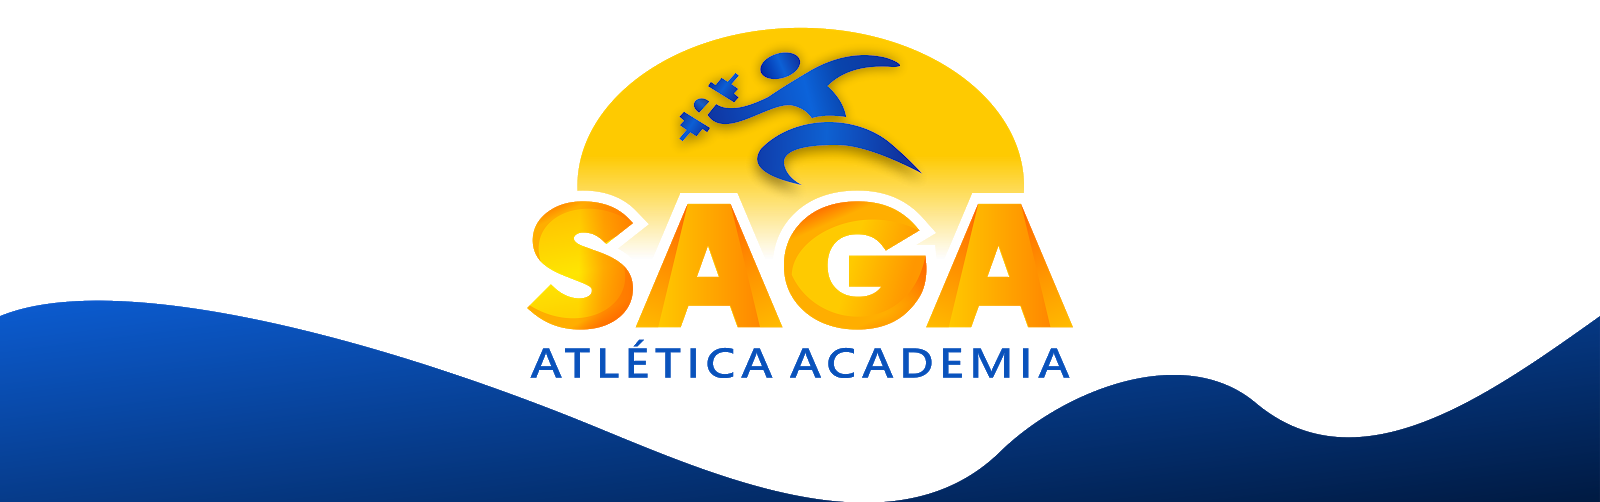 Academia Saga Atlética